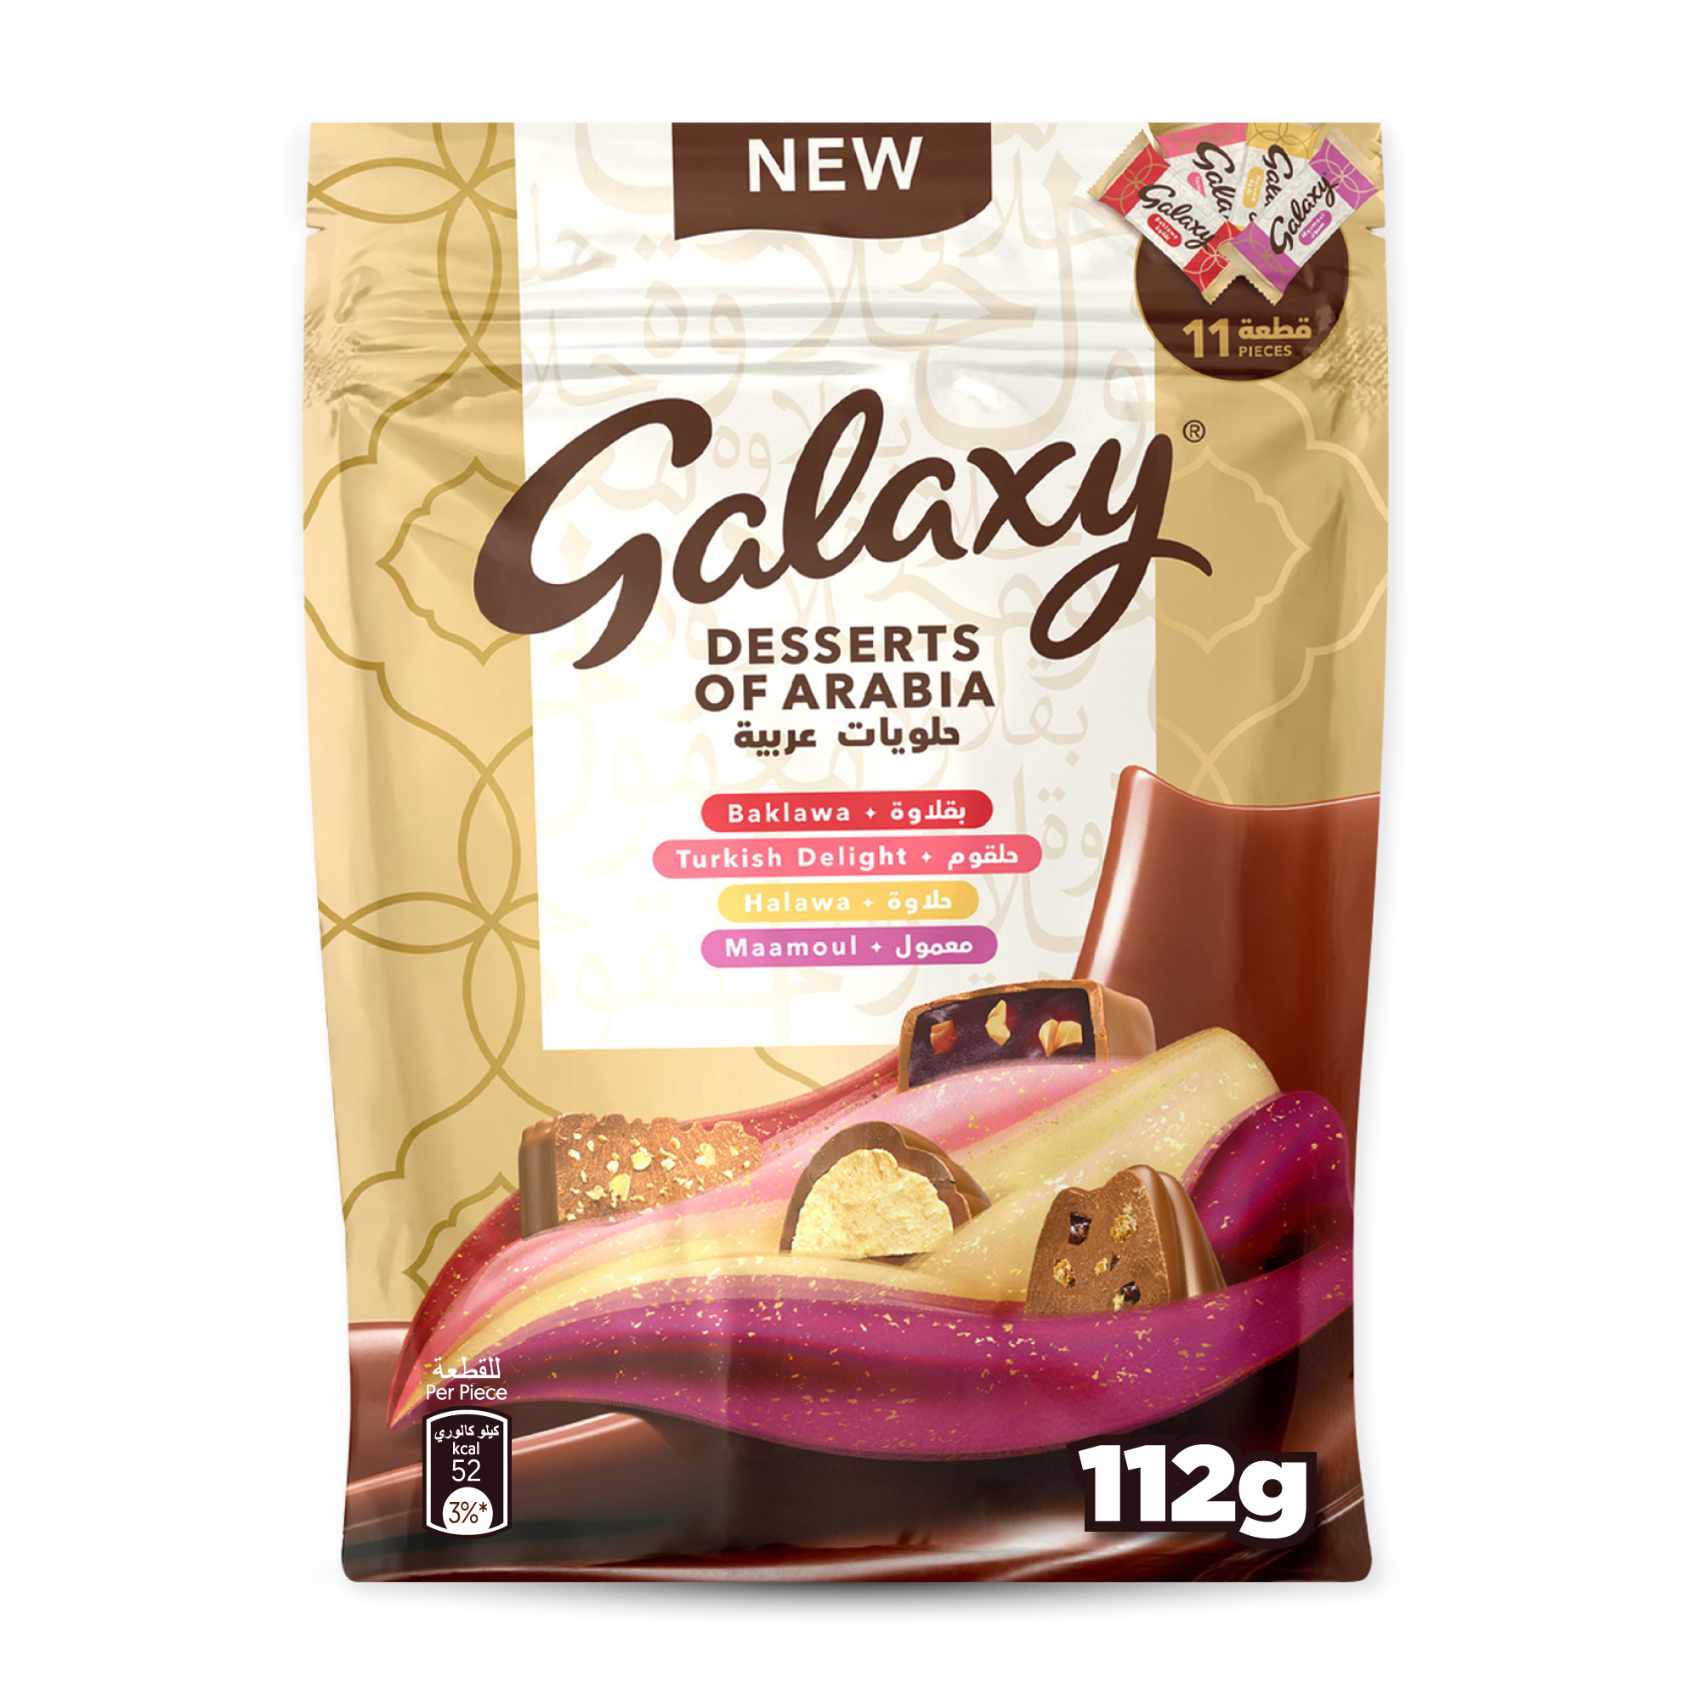 Galaxy Desserts of Arabia Chocolate Box 112g